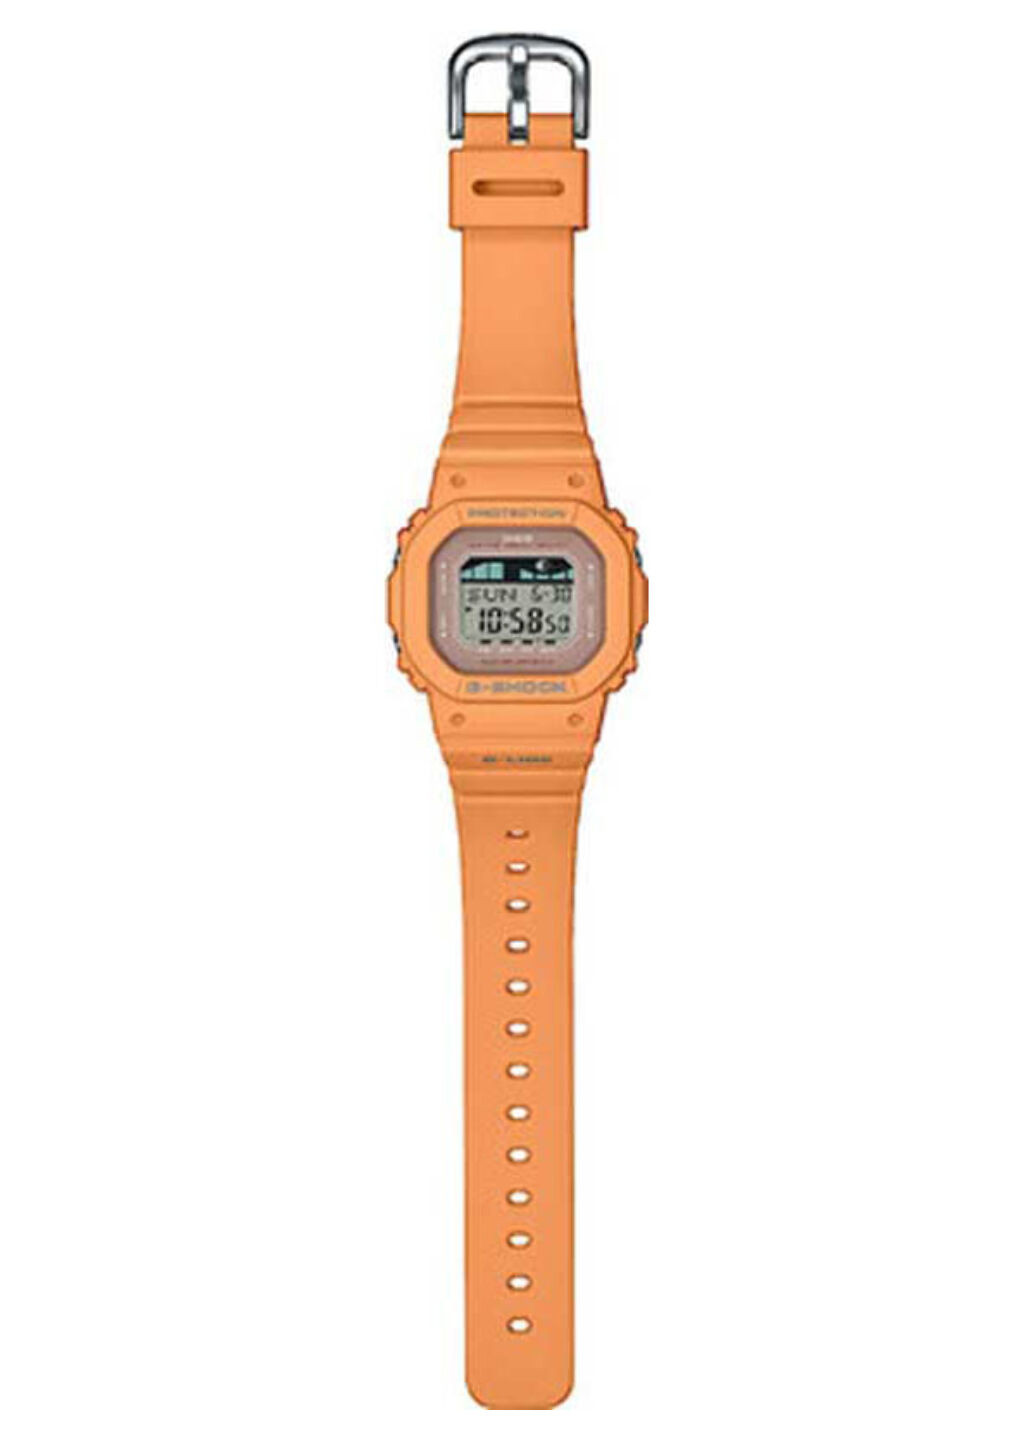 Часы наручные Casio glx-s5600-4er (272128530)